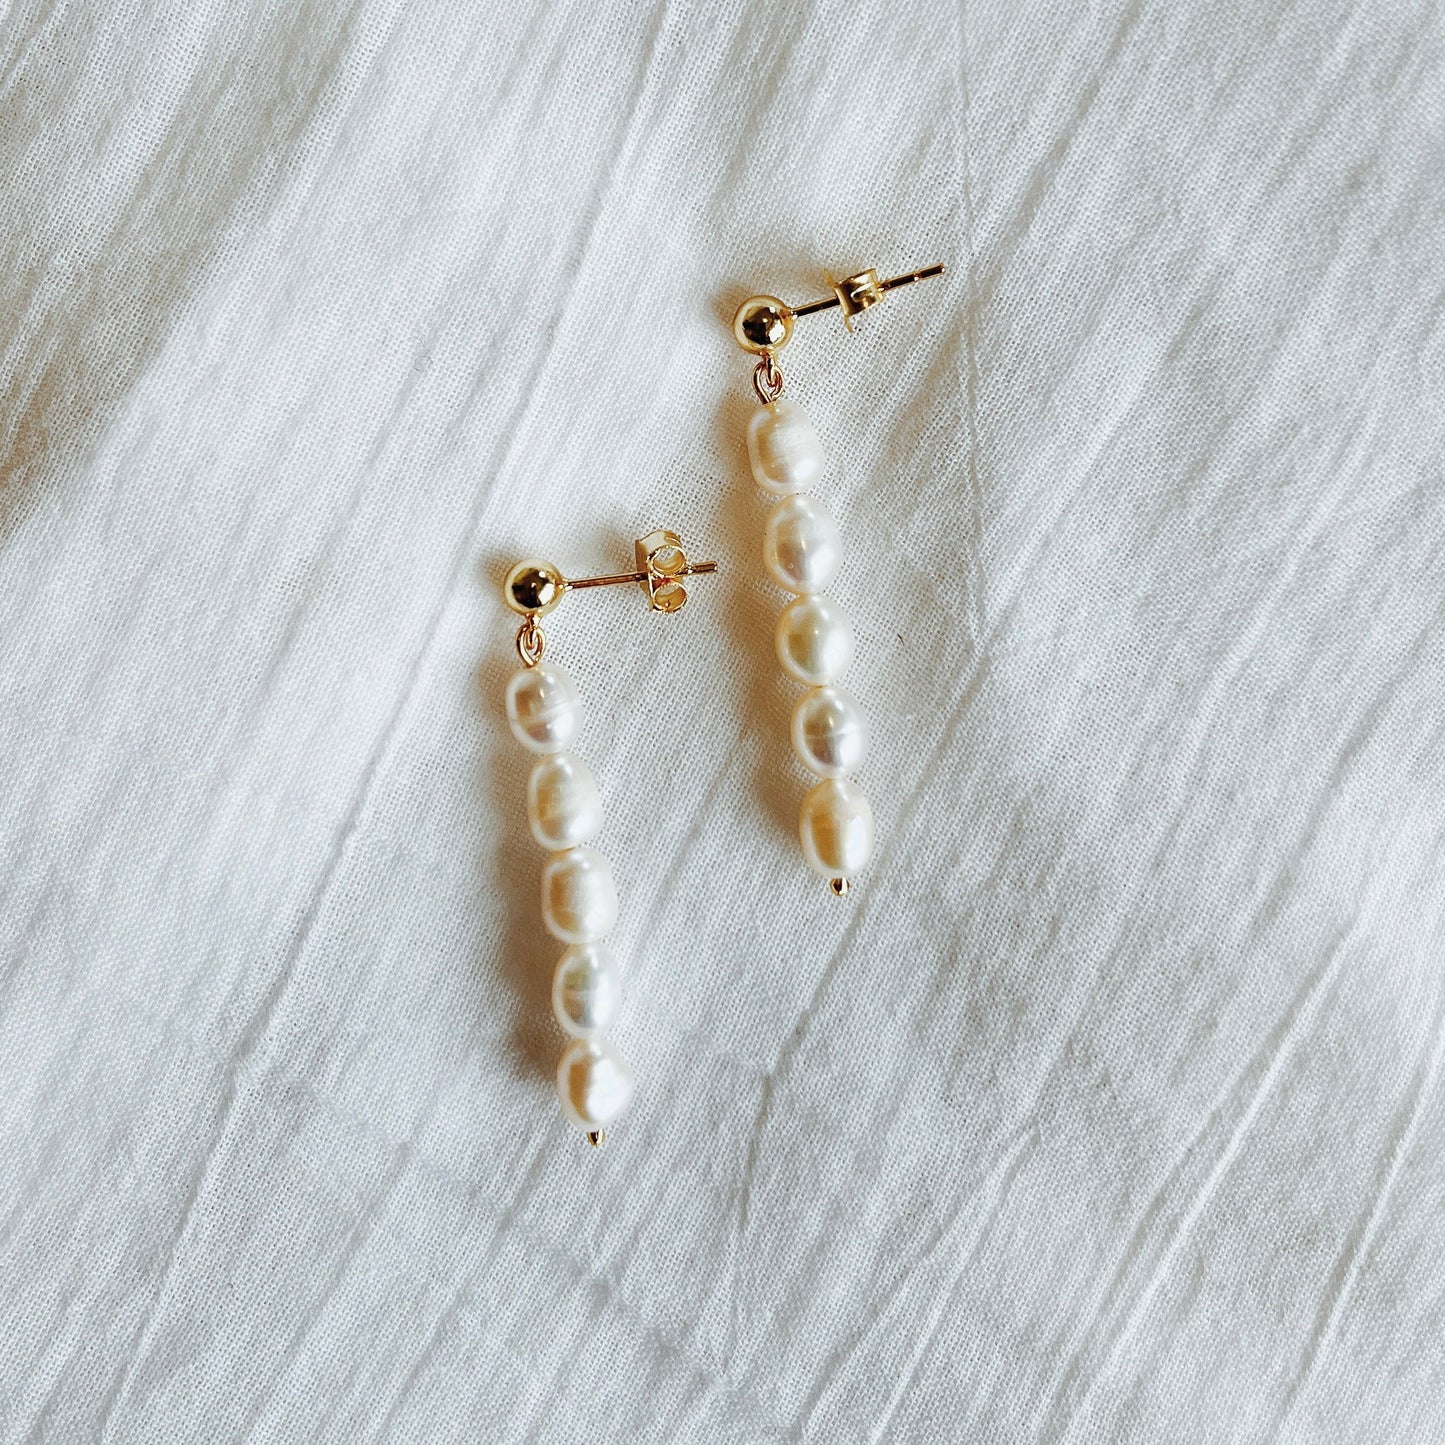 Droplet Pearl Earrings Gold